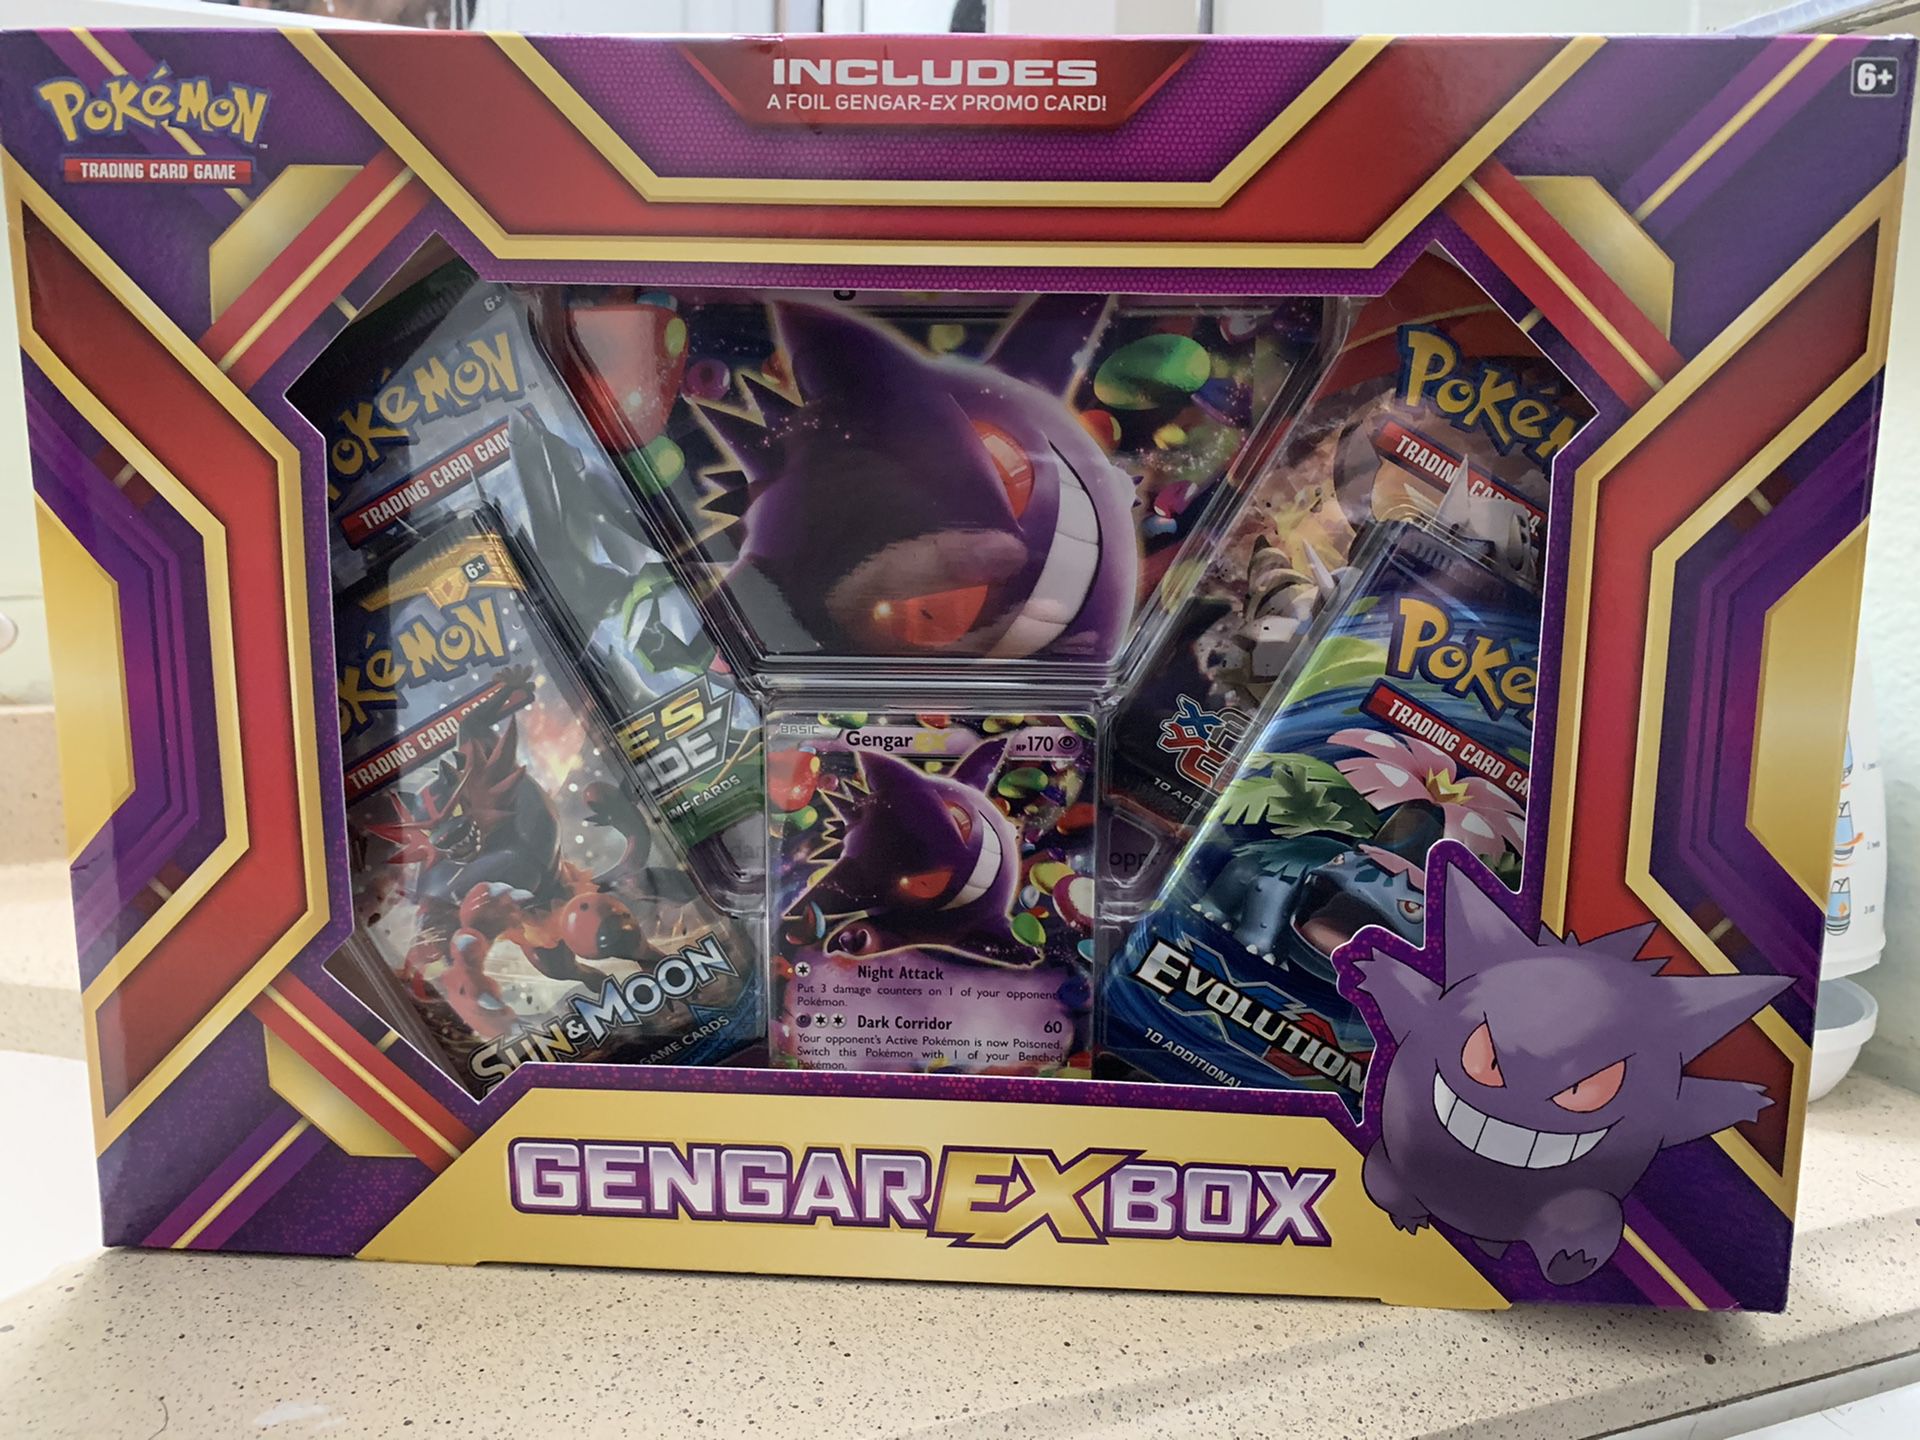 Gengar ex box